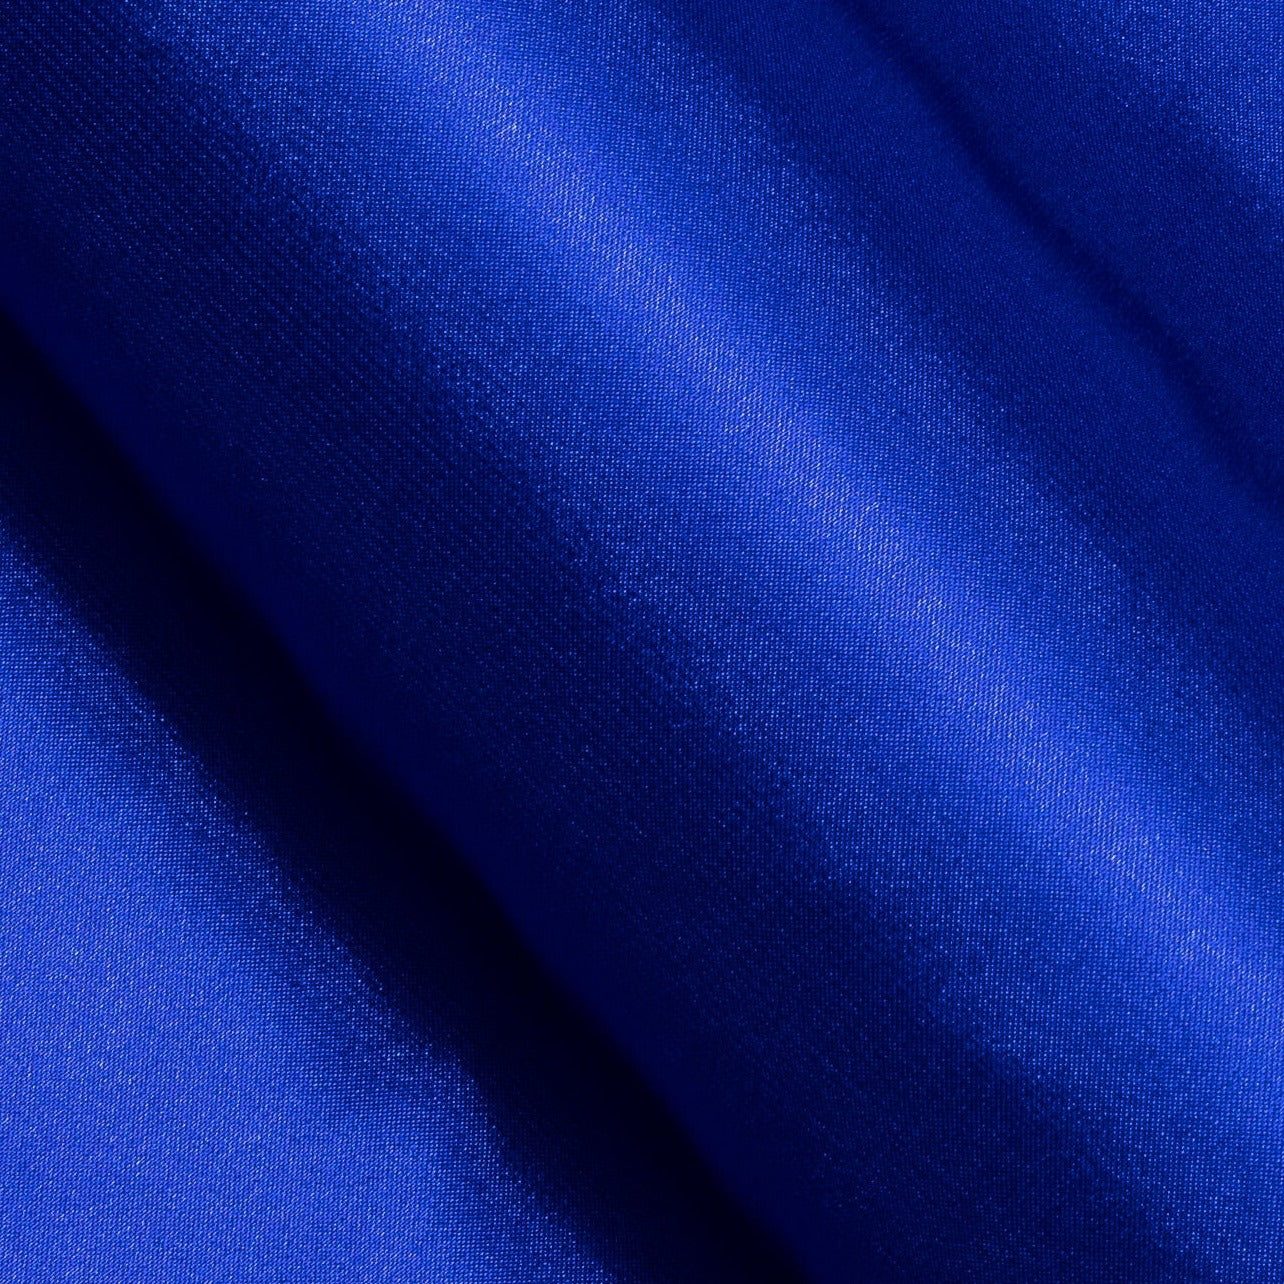 Fabric for blue satin shirt